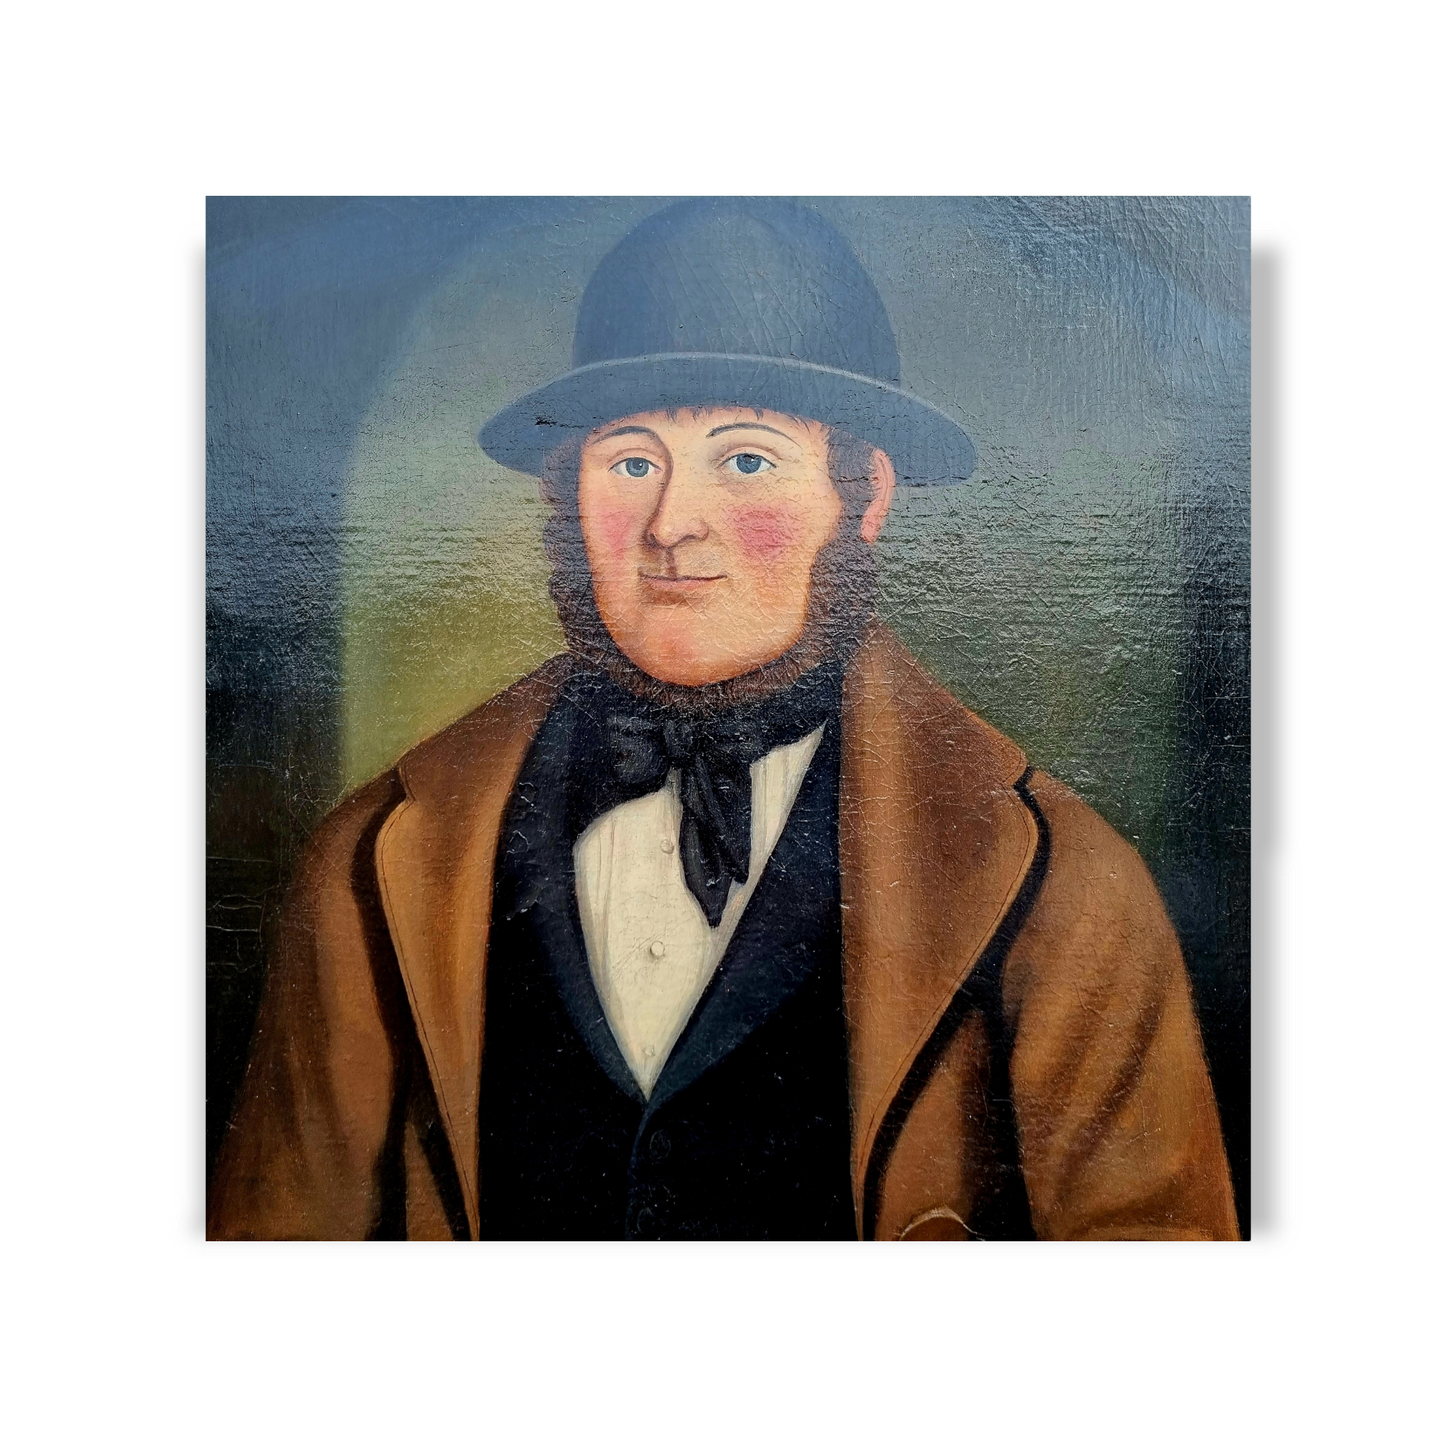 19th Century Primitive / Naïve English School Antique Oil On Canvas Portrait Of A Squire Wearing A Bowler Hat